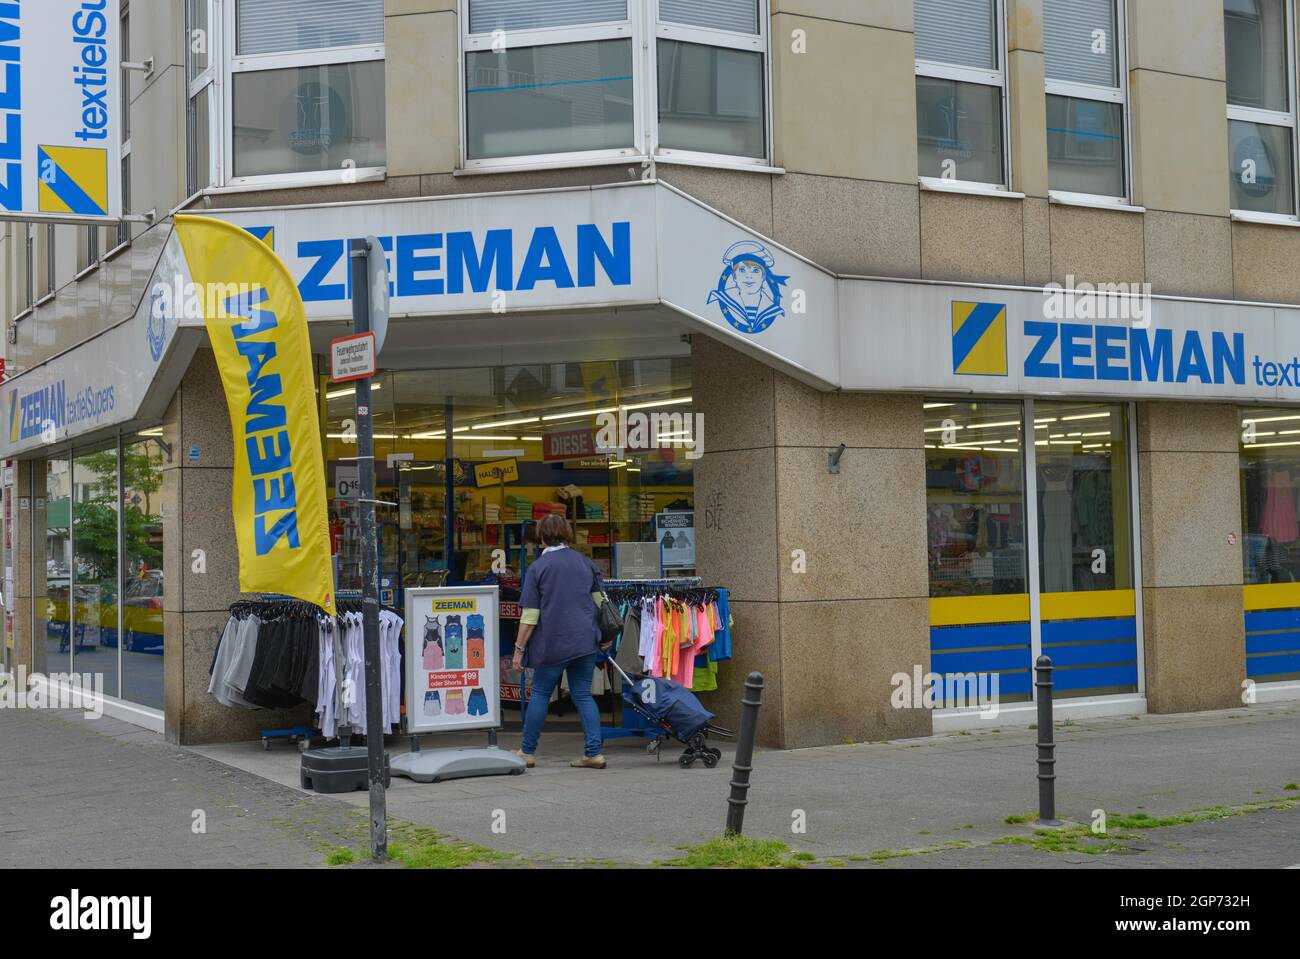 Shop zeeman hi-res stock photography and images - Alamy